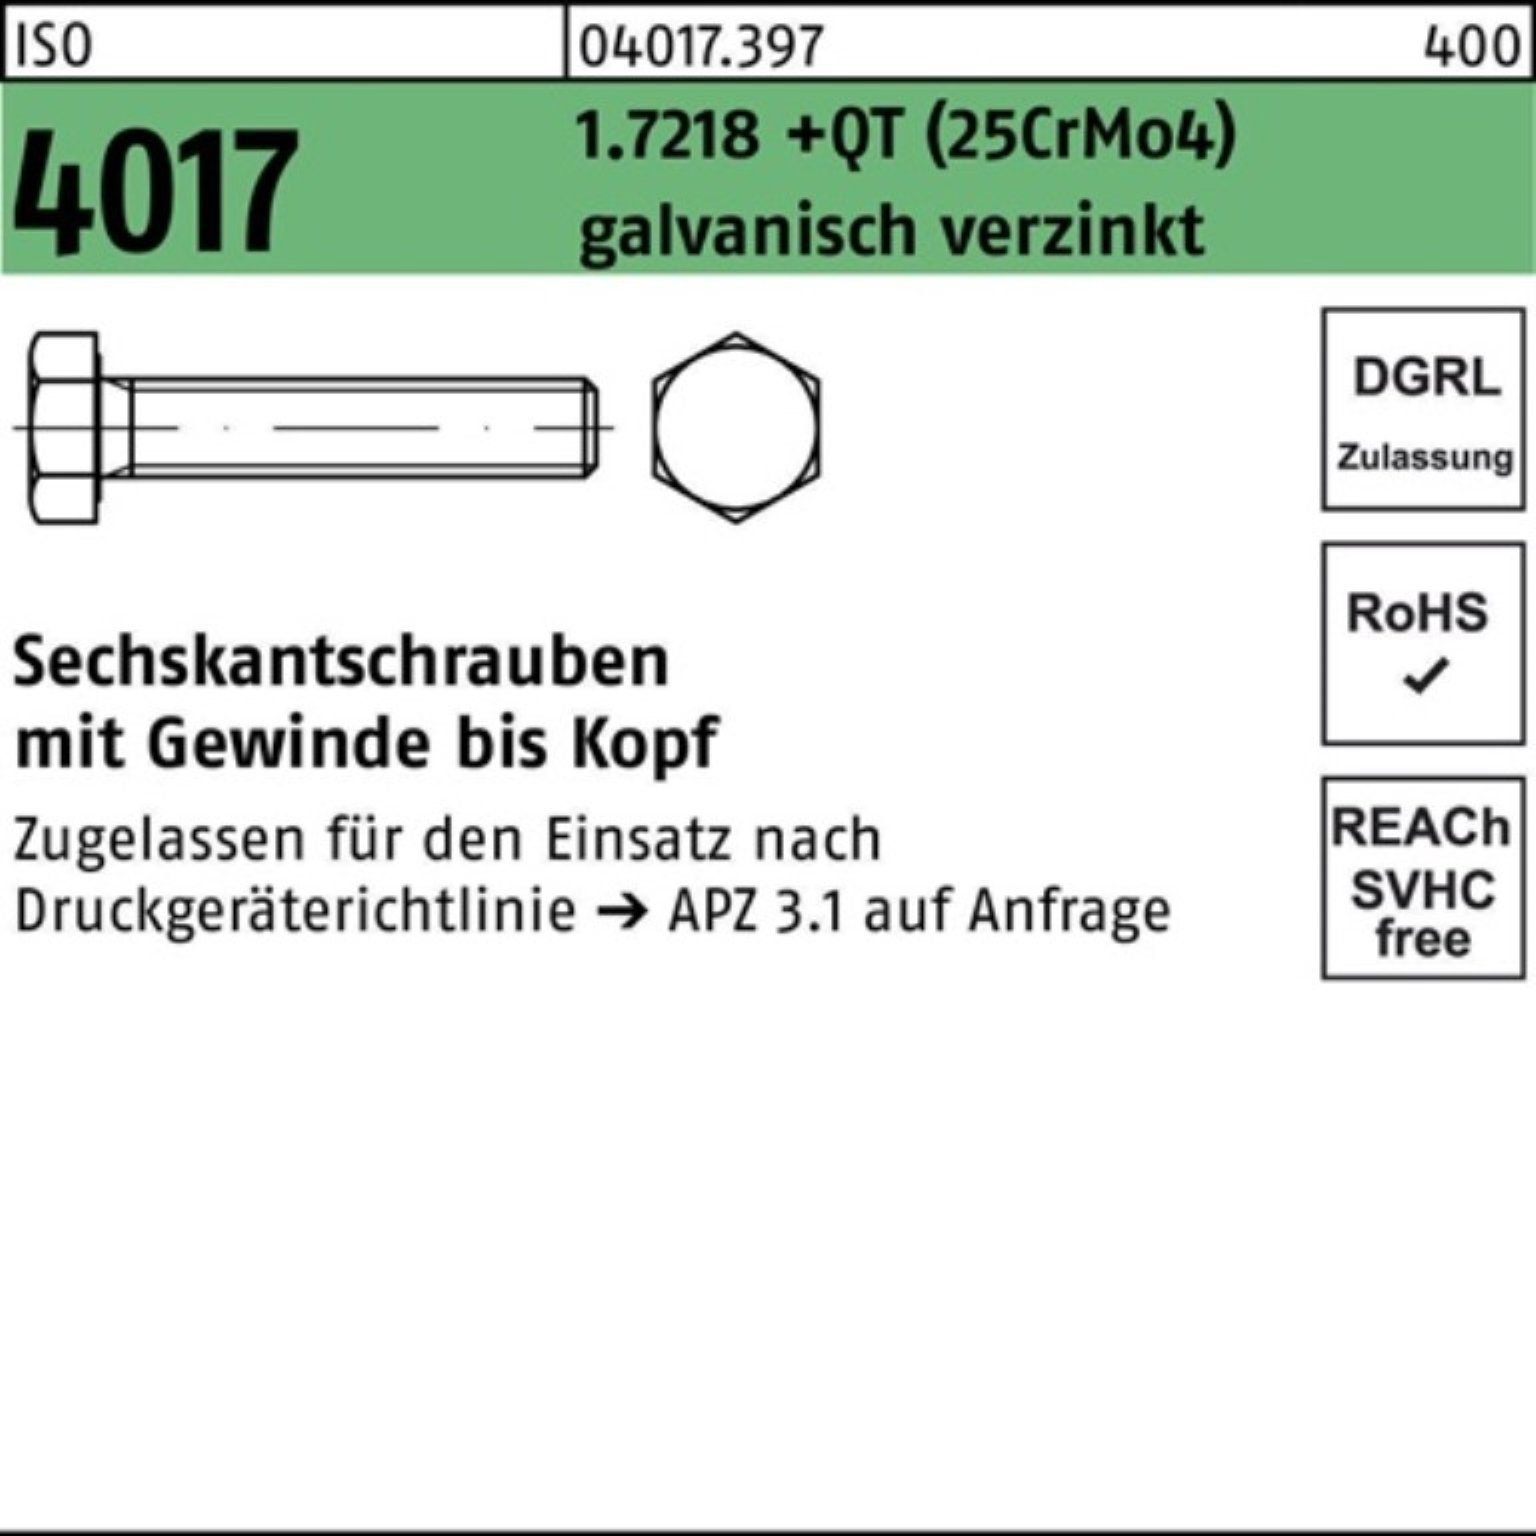 Bufab Sechskantschraube 100er Pack Sechskantschraube VG 1.7218 ISO M30x65 g (25CrMo4) 4017 +QT